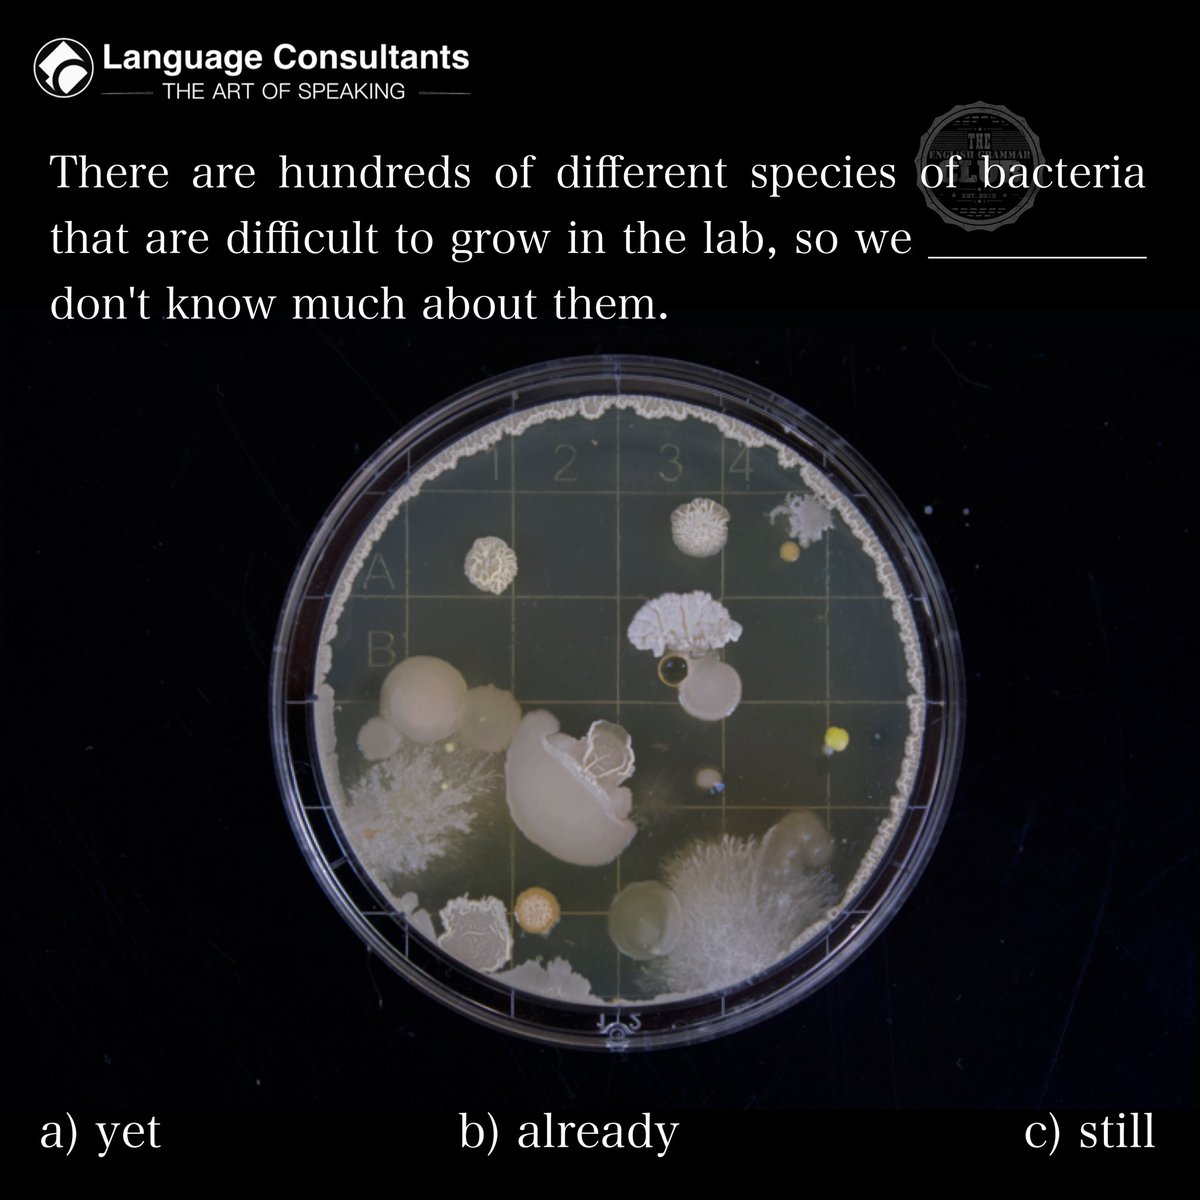 #english 🇬🇧 #englishlearning #learnenglish #languagelearning #englishonline #italianonline 
#bacteria #antibacterial #goodbacteria #beneficialbacteria #medical #biology #science #health